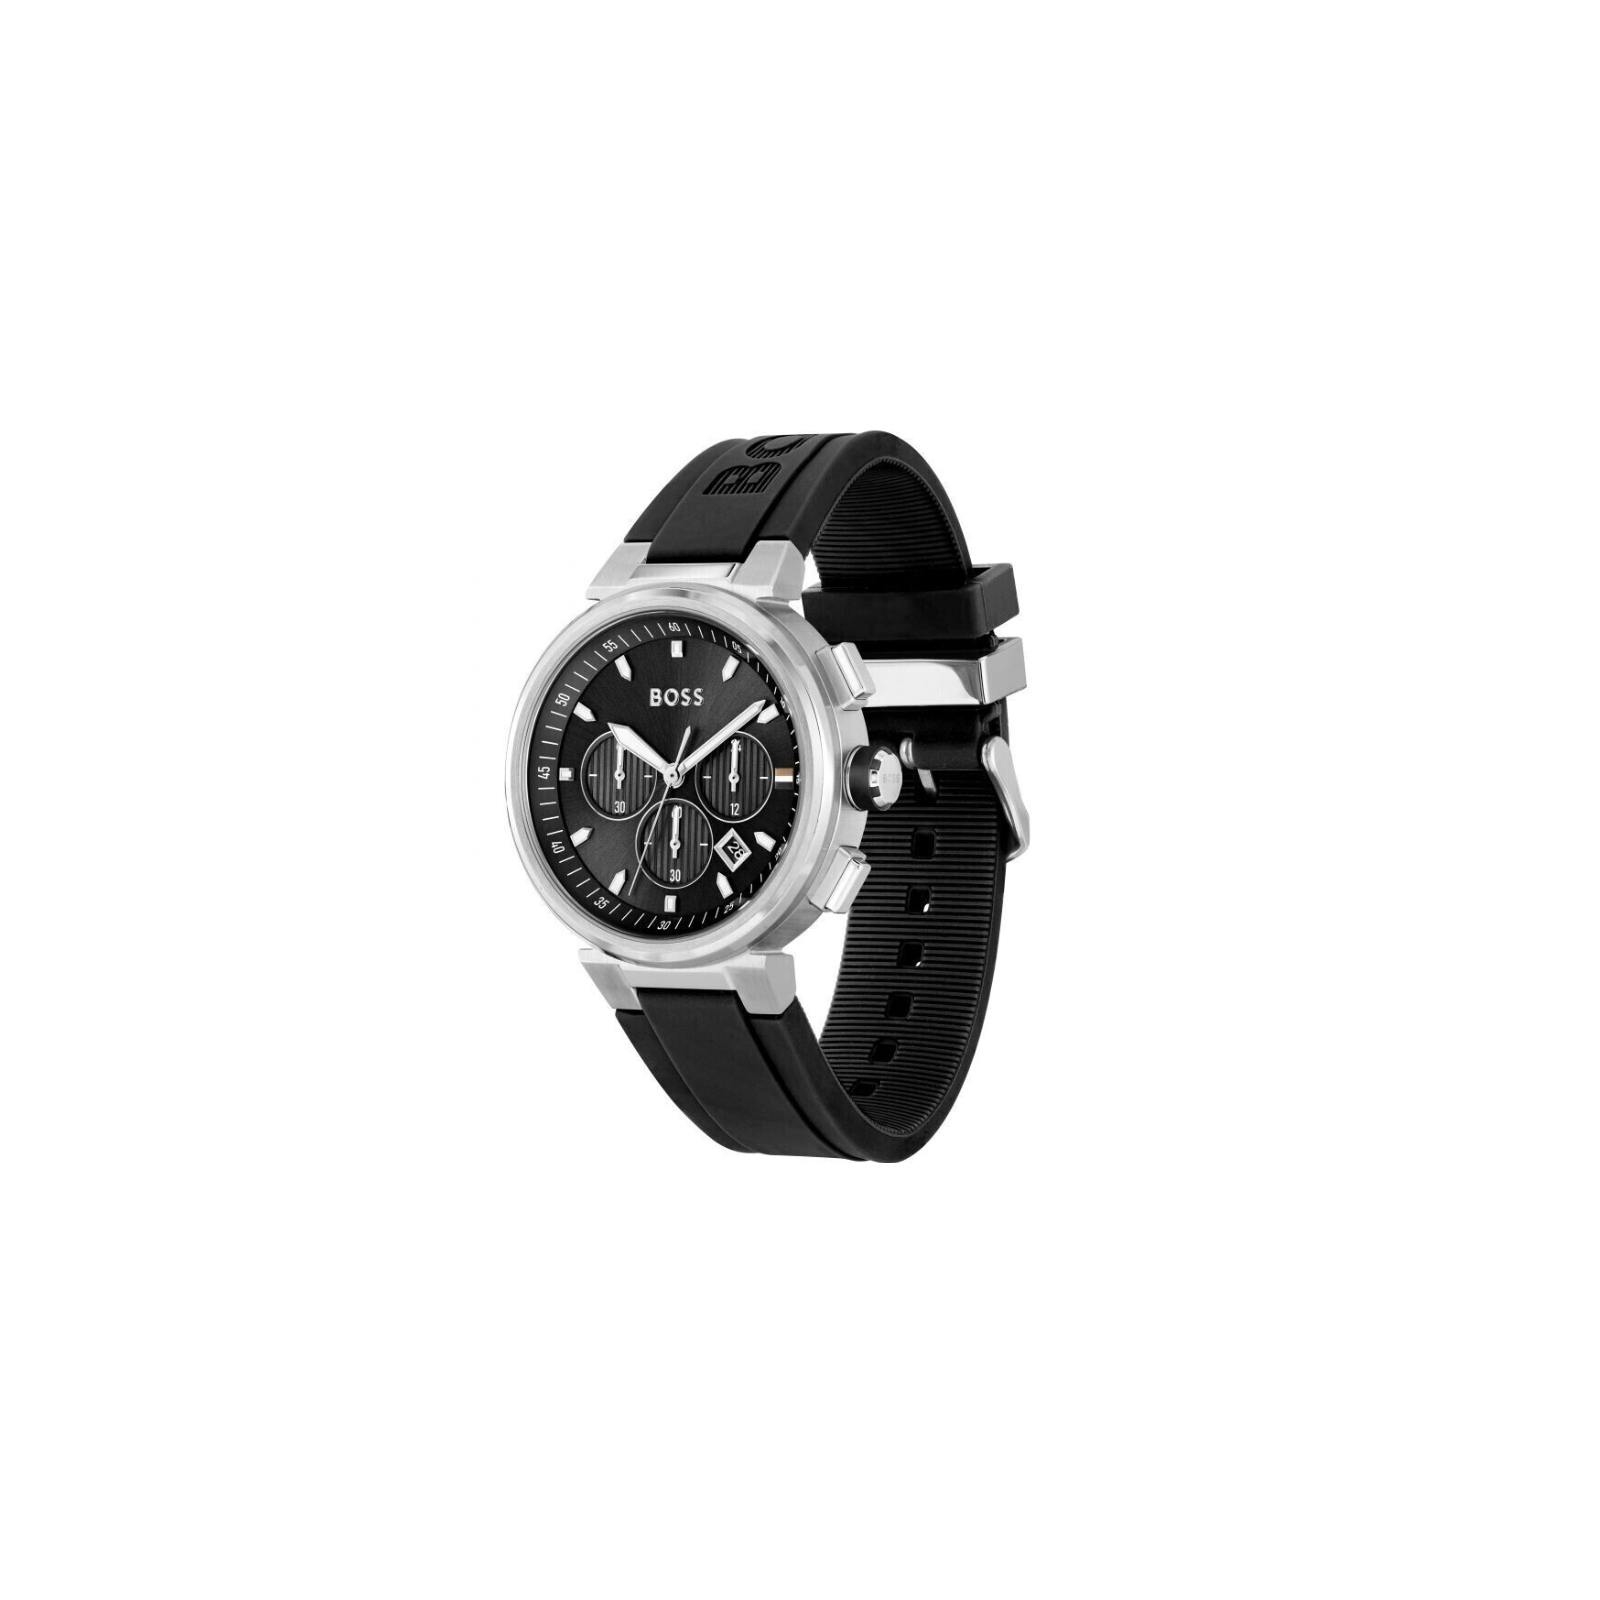 Reloj Hugo Boss hombre One-Men cronógrafo de silicona negro 1513997